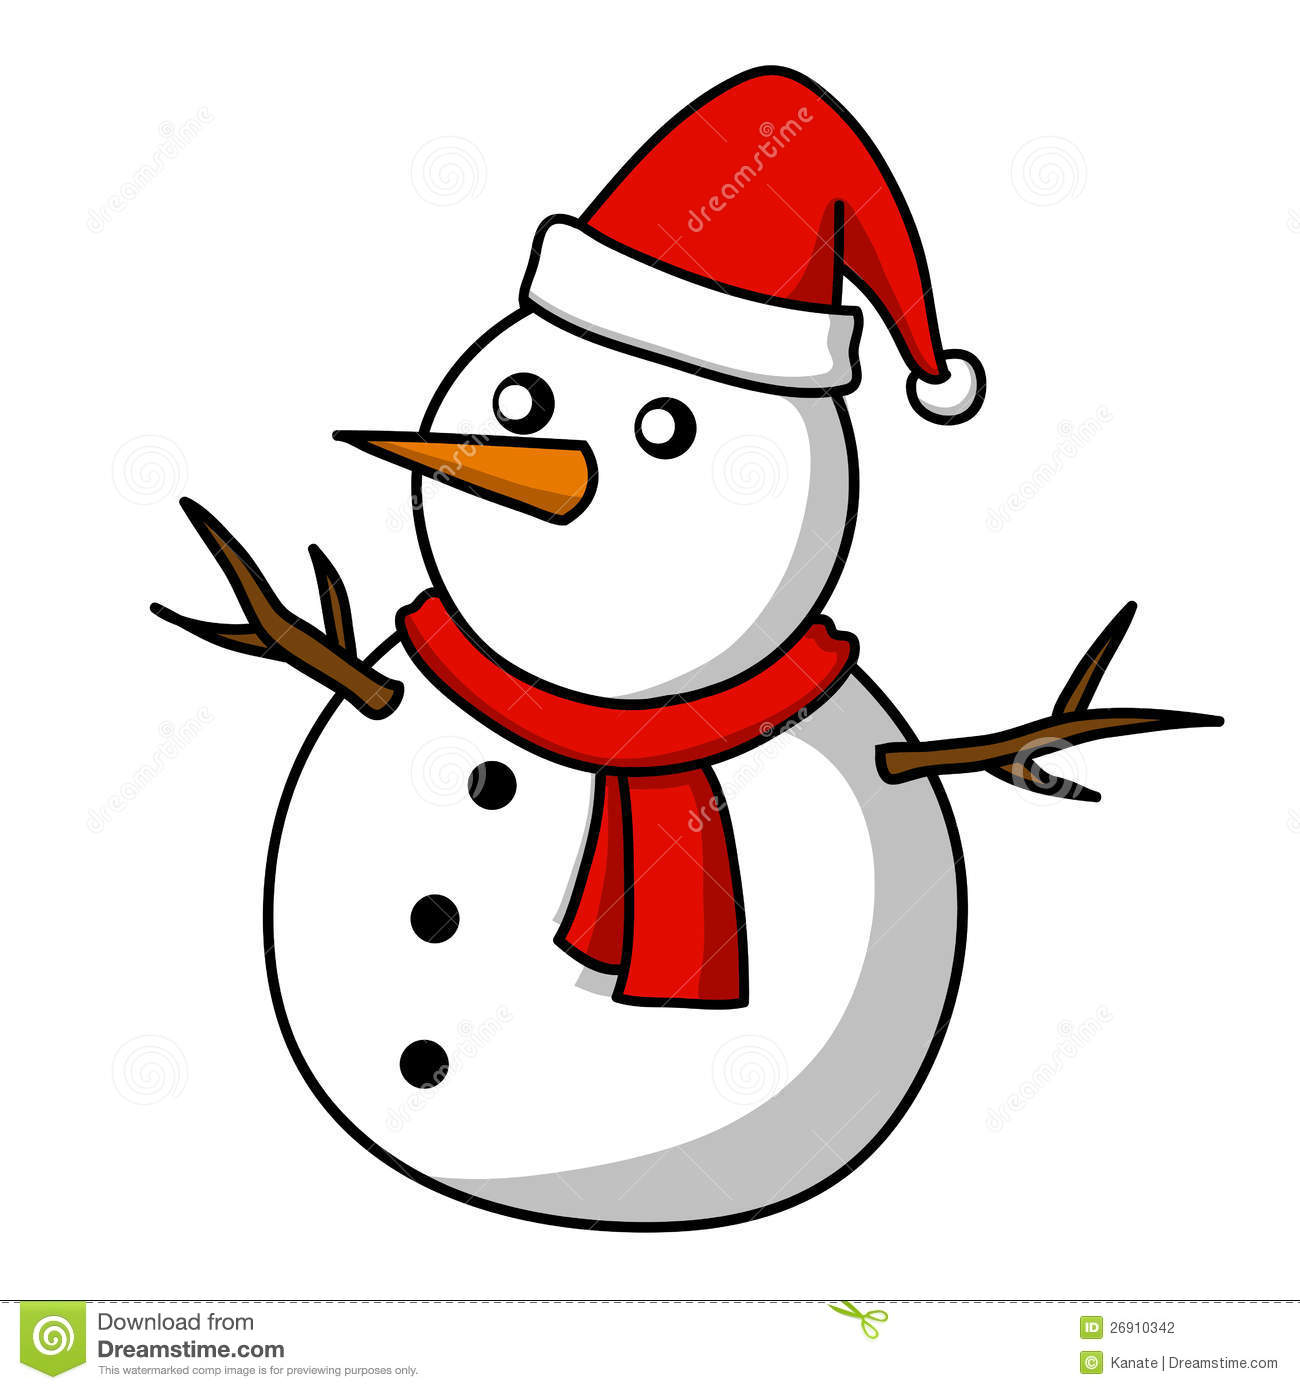 Christmas Snowman Cartoon  Stock Photography   Image  26910342